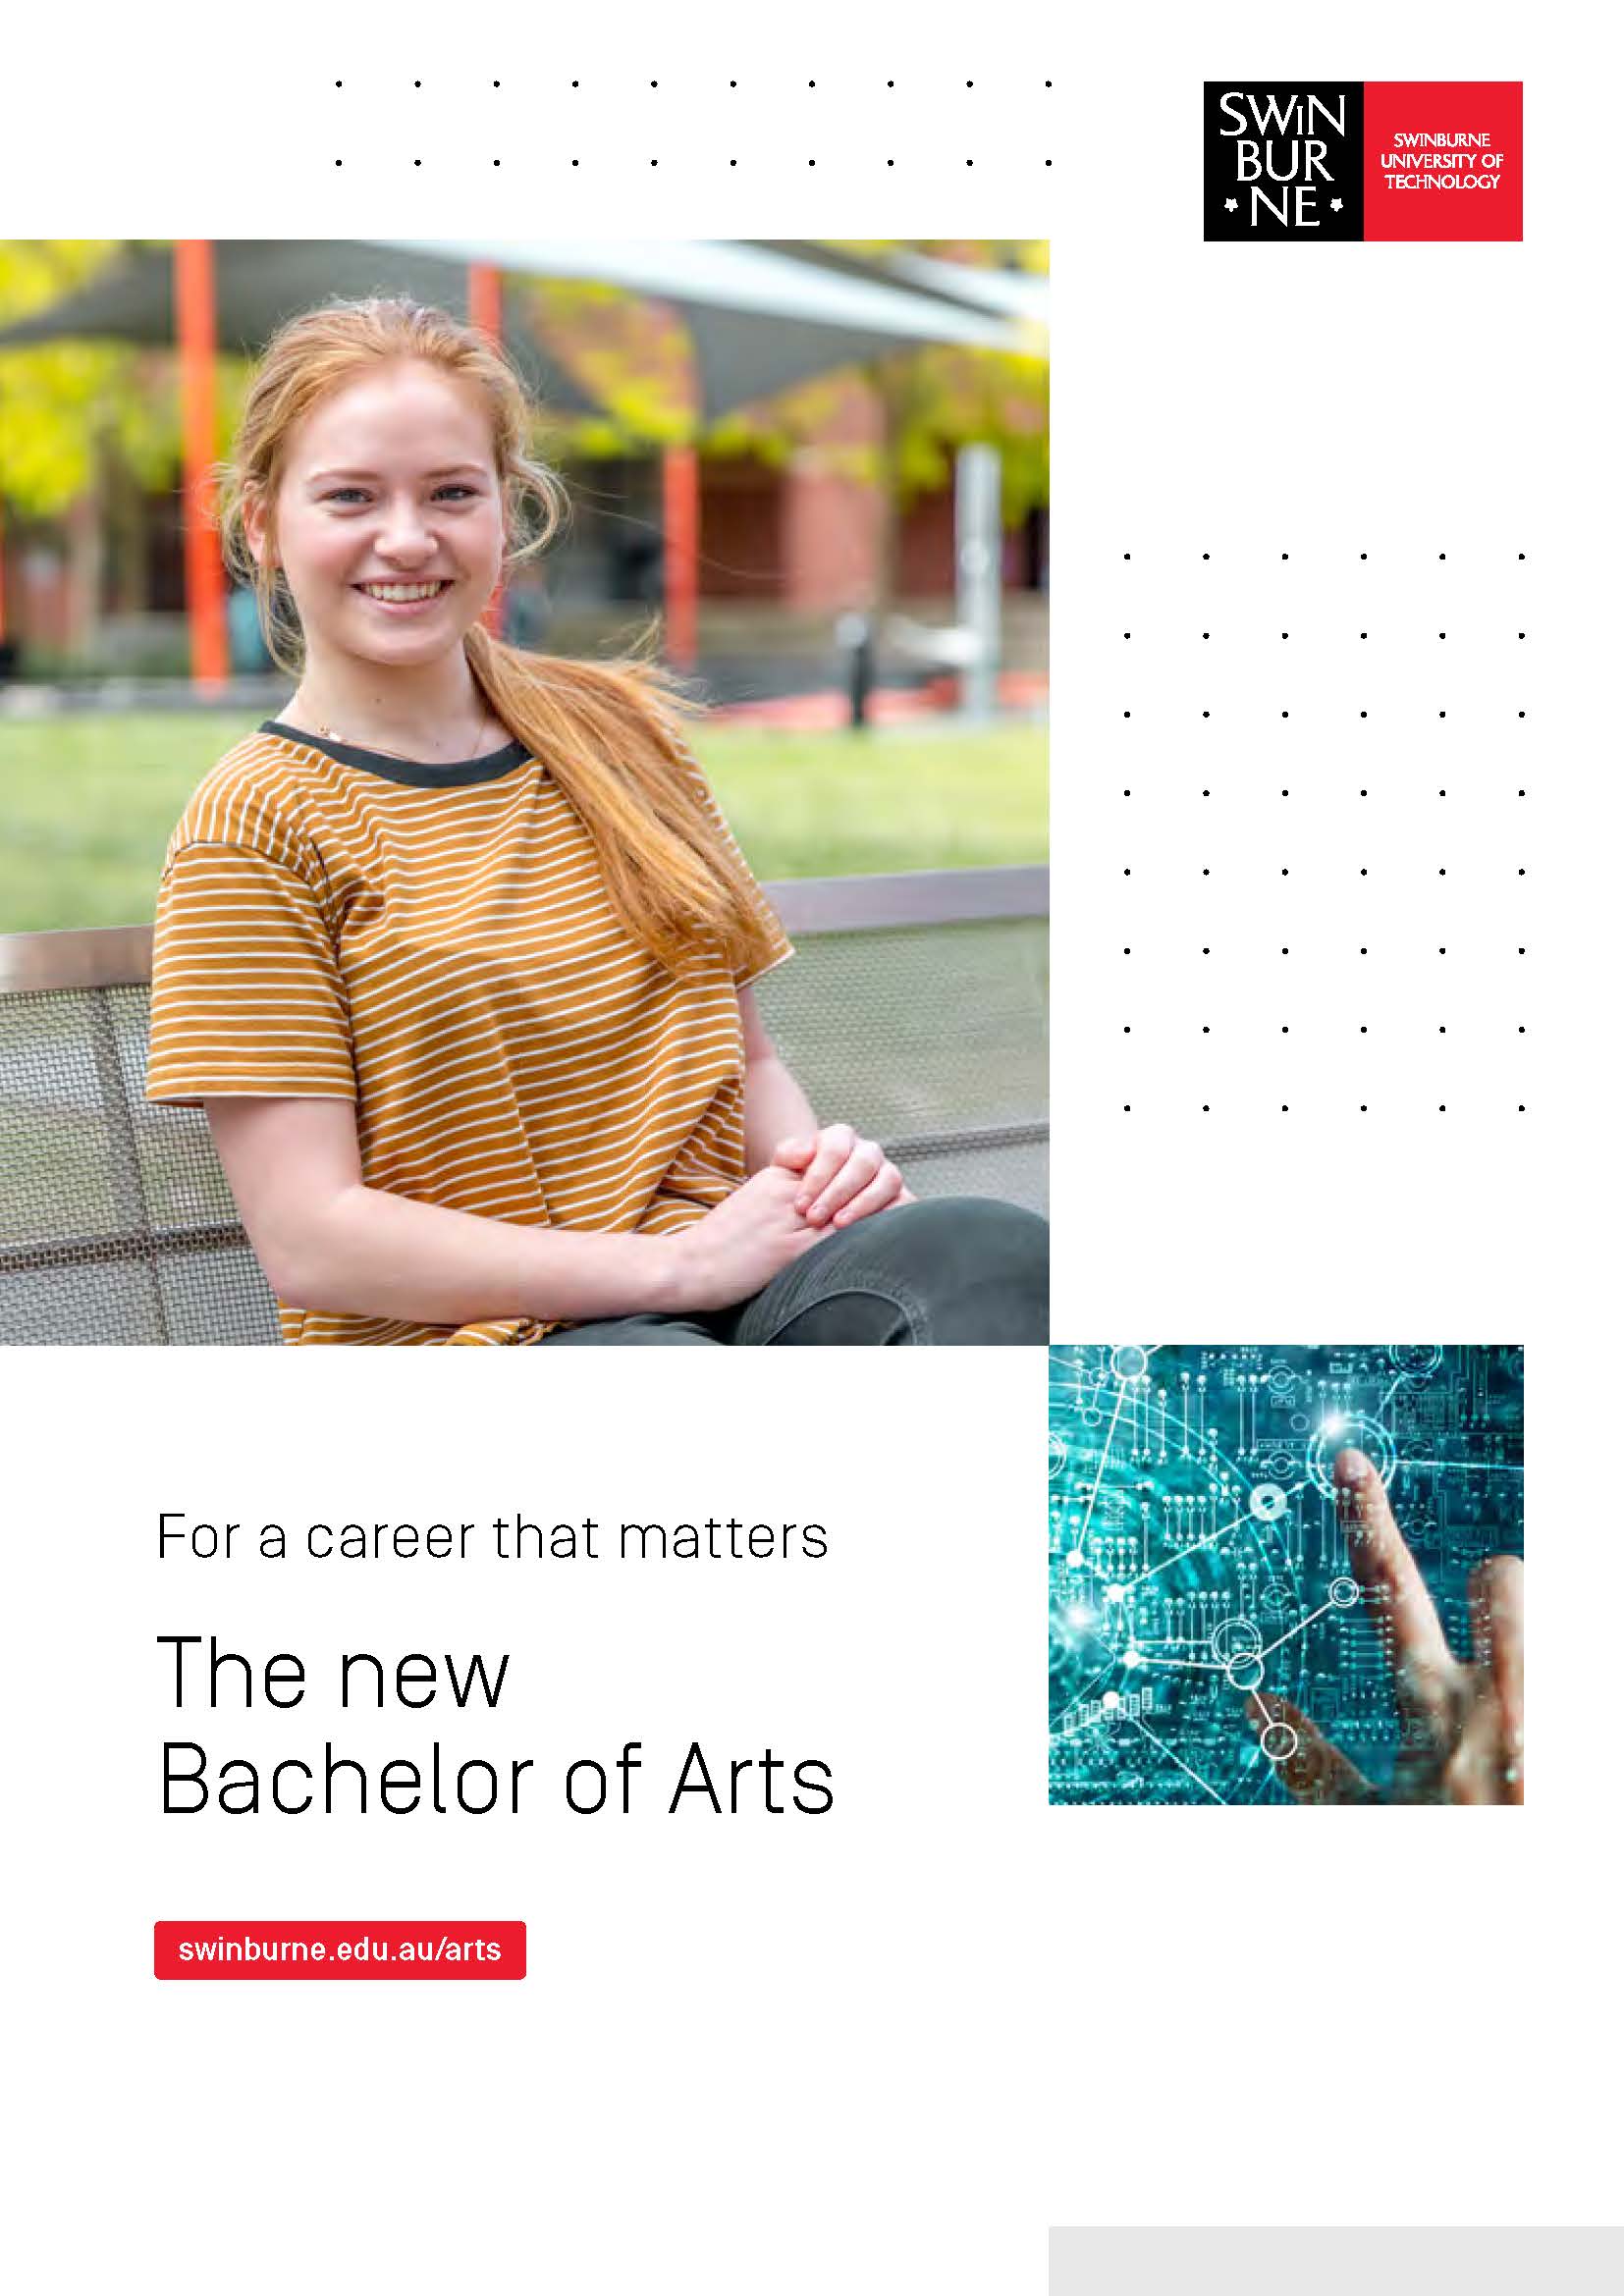 The new Bachelor of Arts